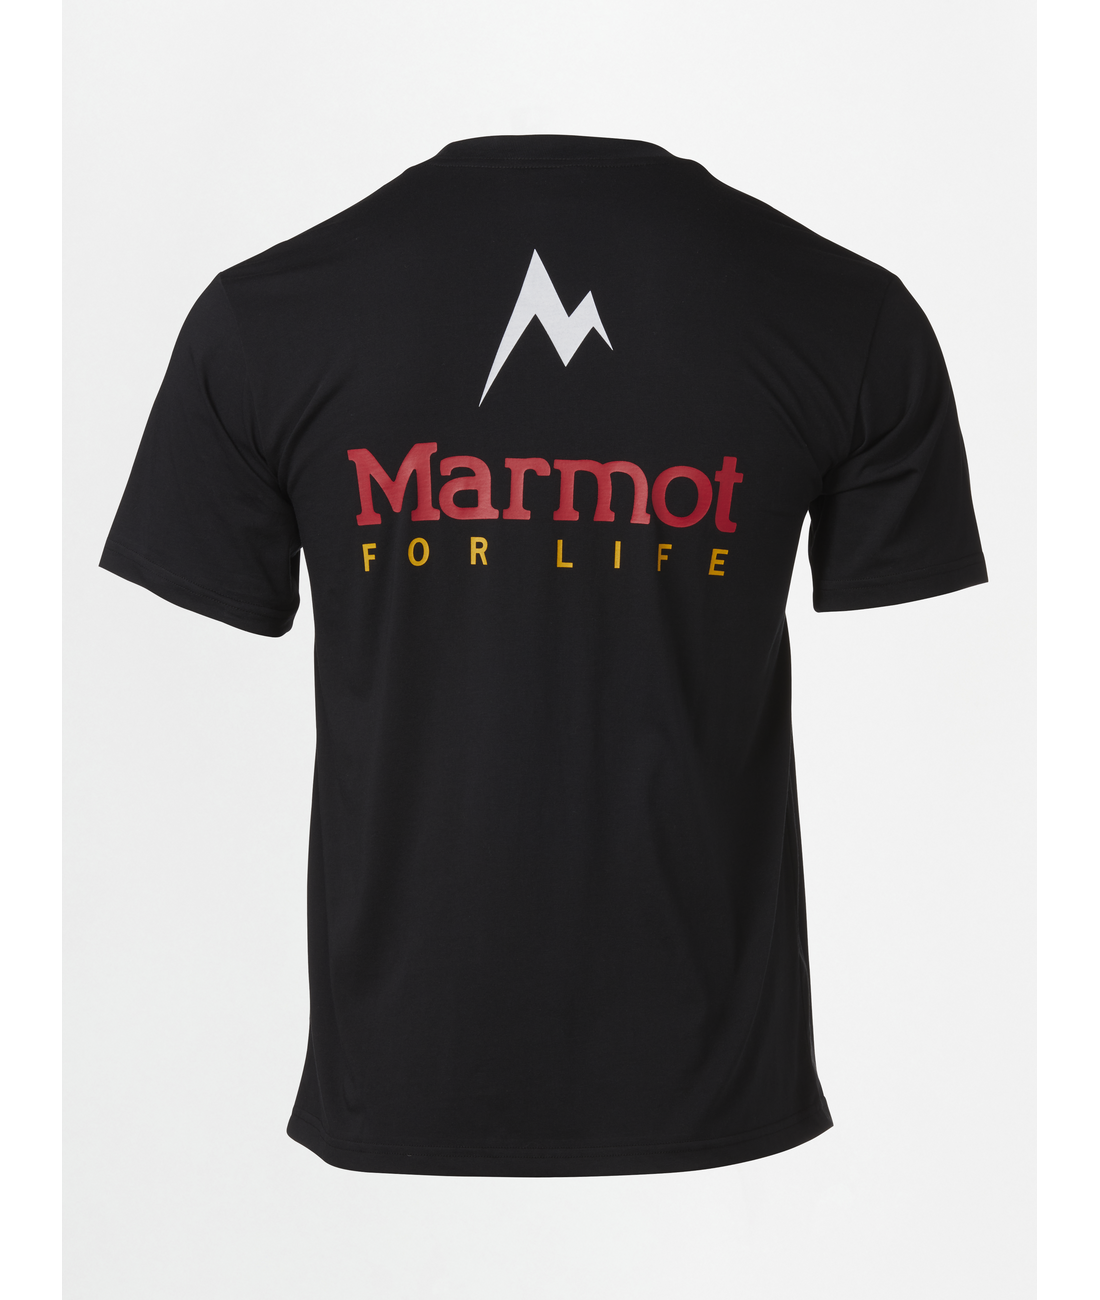 Marmot for Life Tee S/S